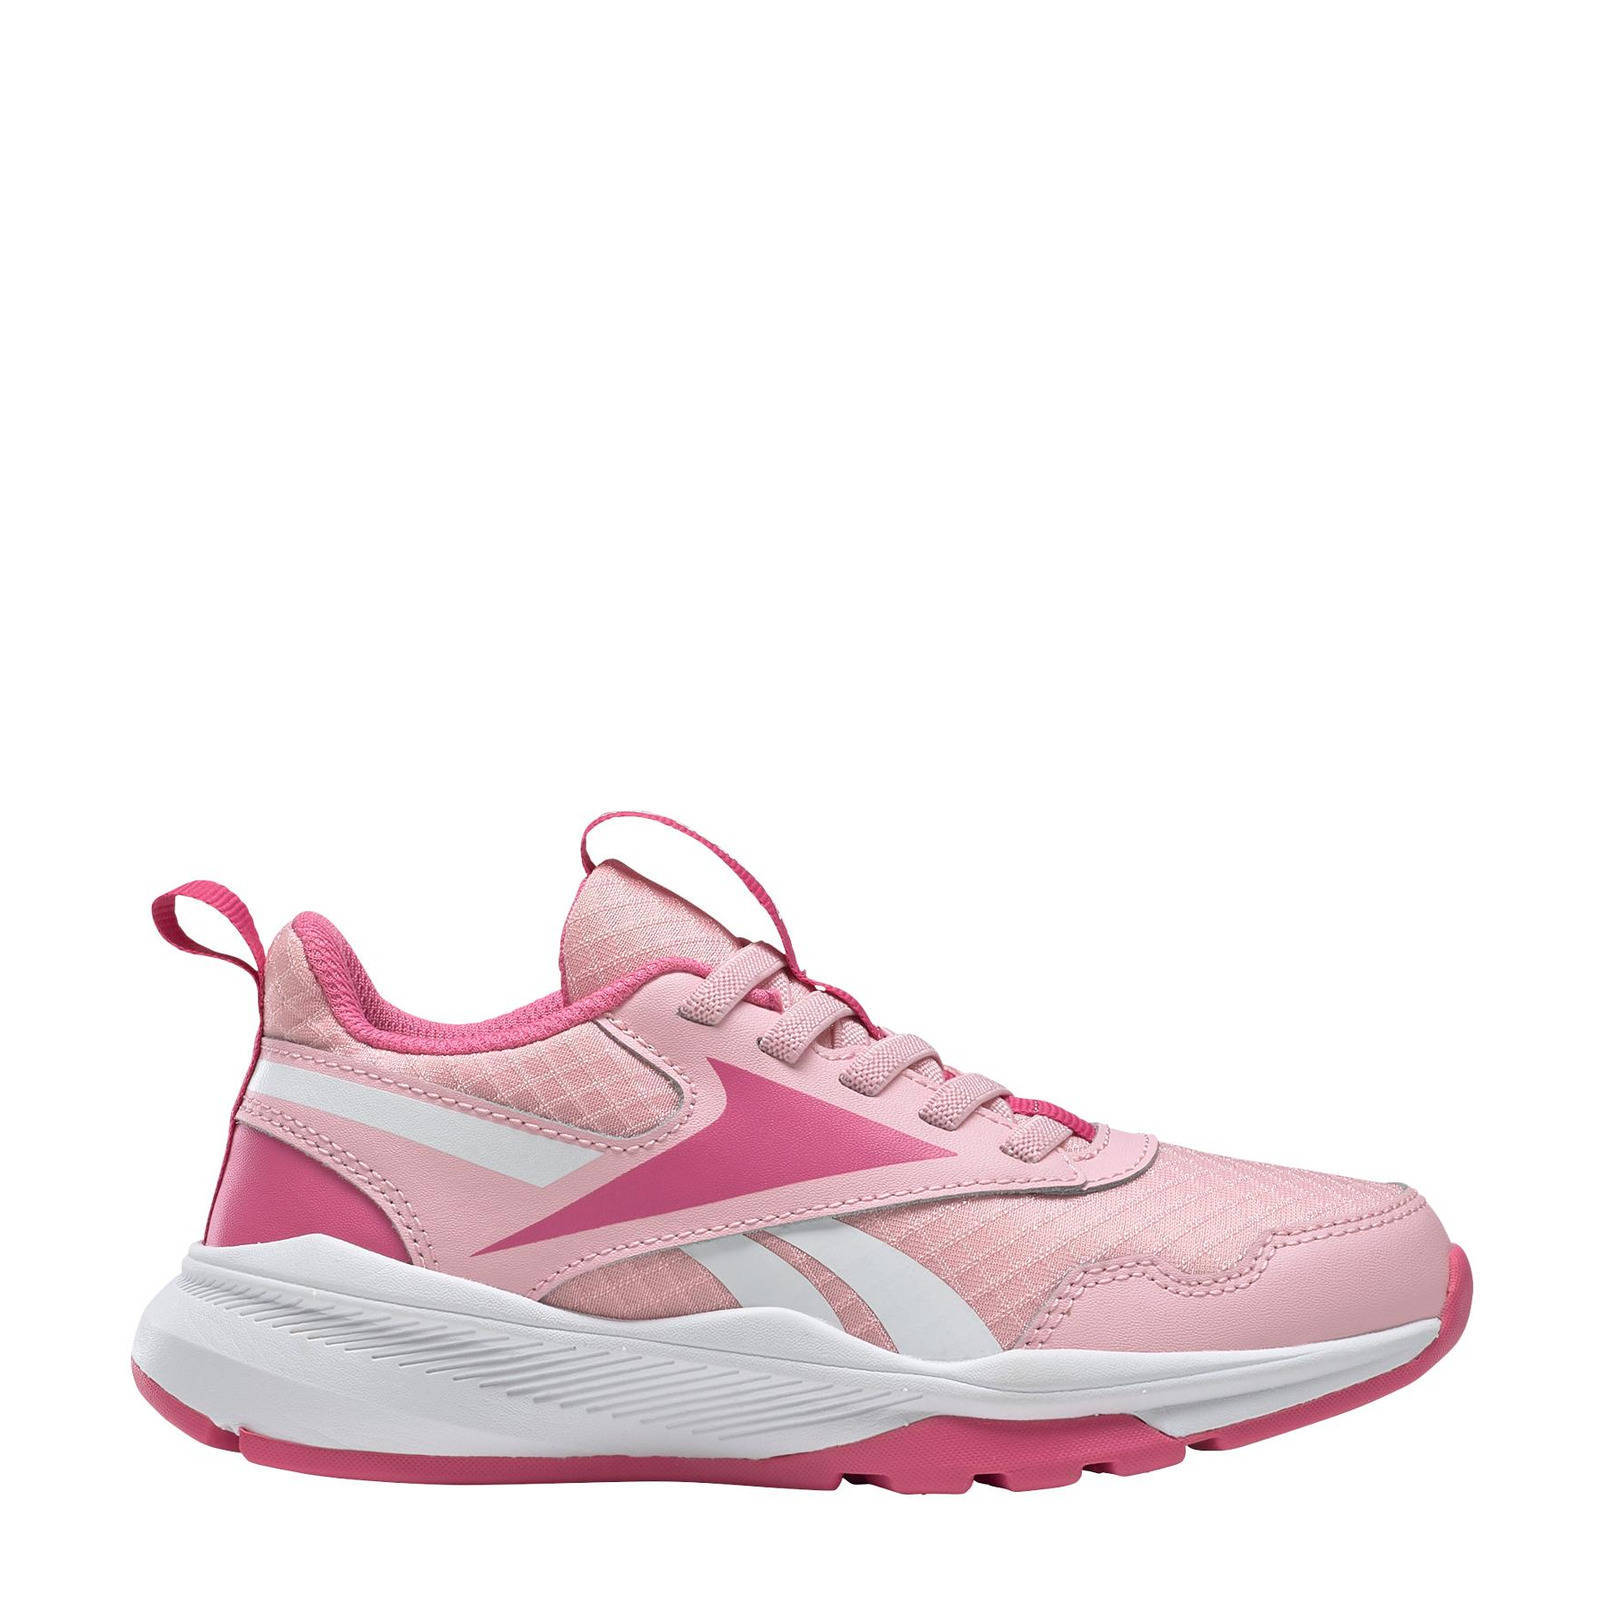 Reebok xt sprinter 2 schoenen Pink Glow/True Pink/Cloud White online kopen